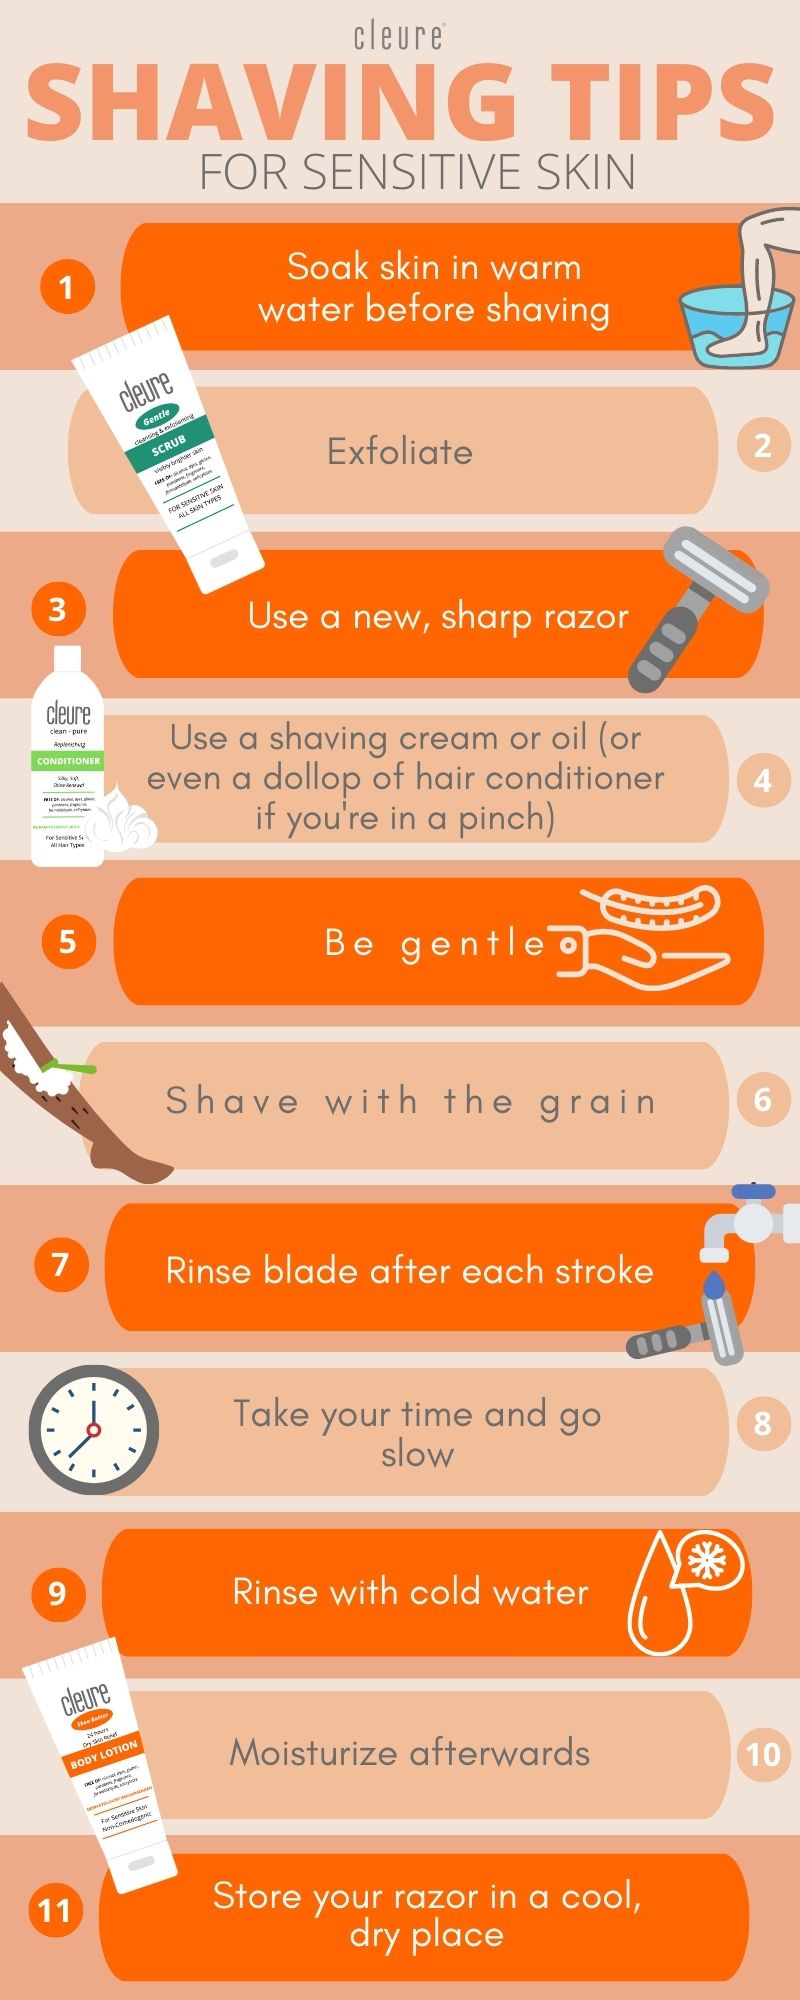 Shaving Tips for Sensitive Skin Infographic - Cleure